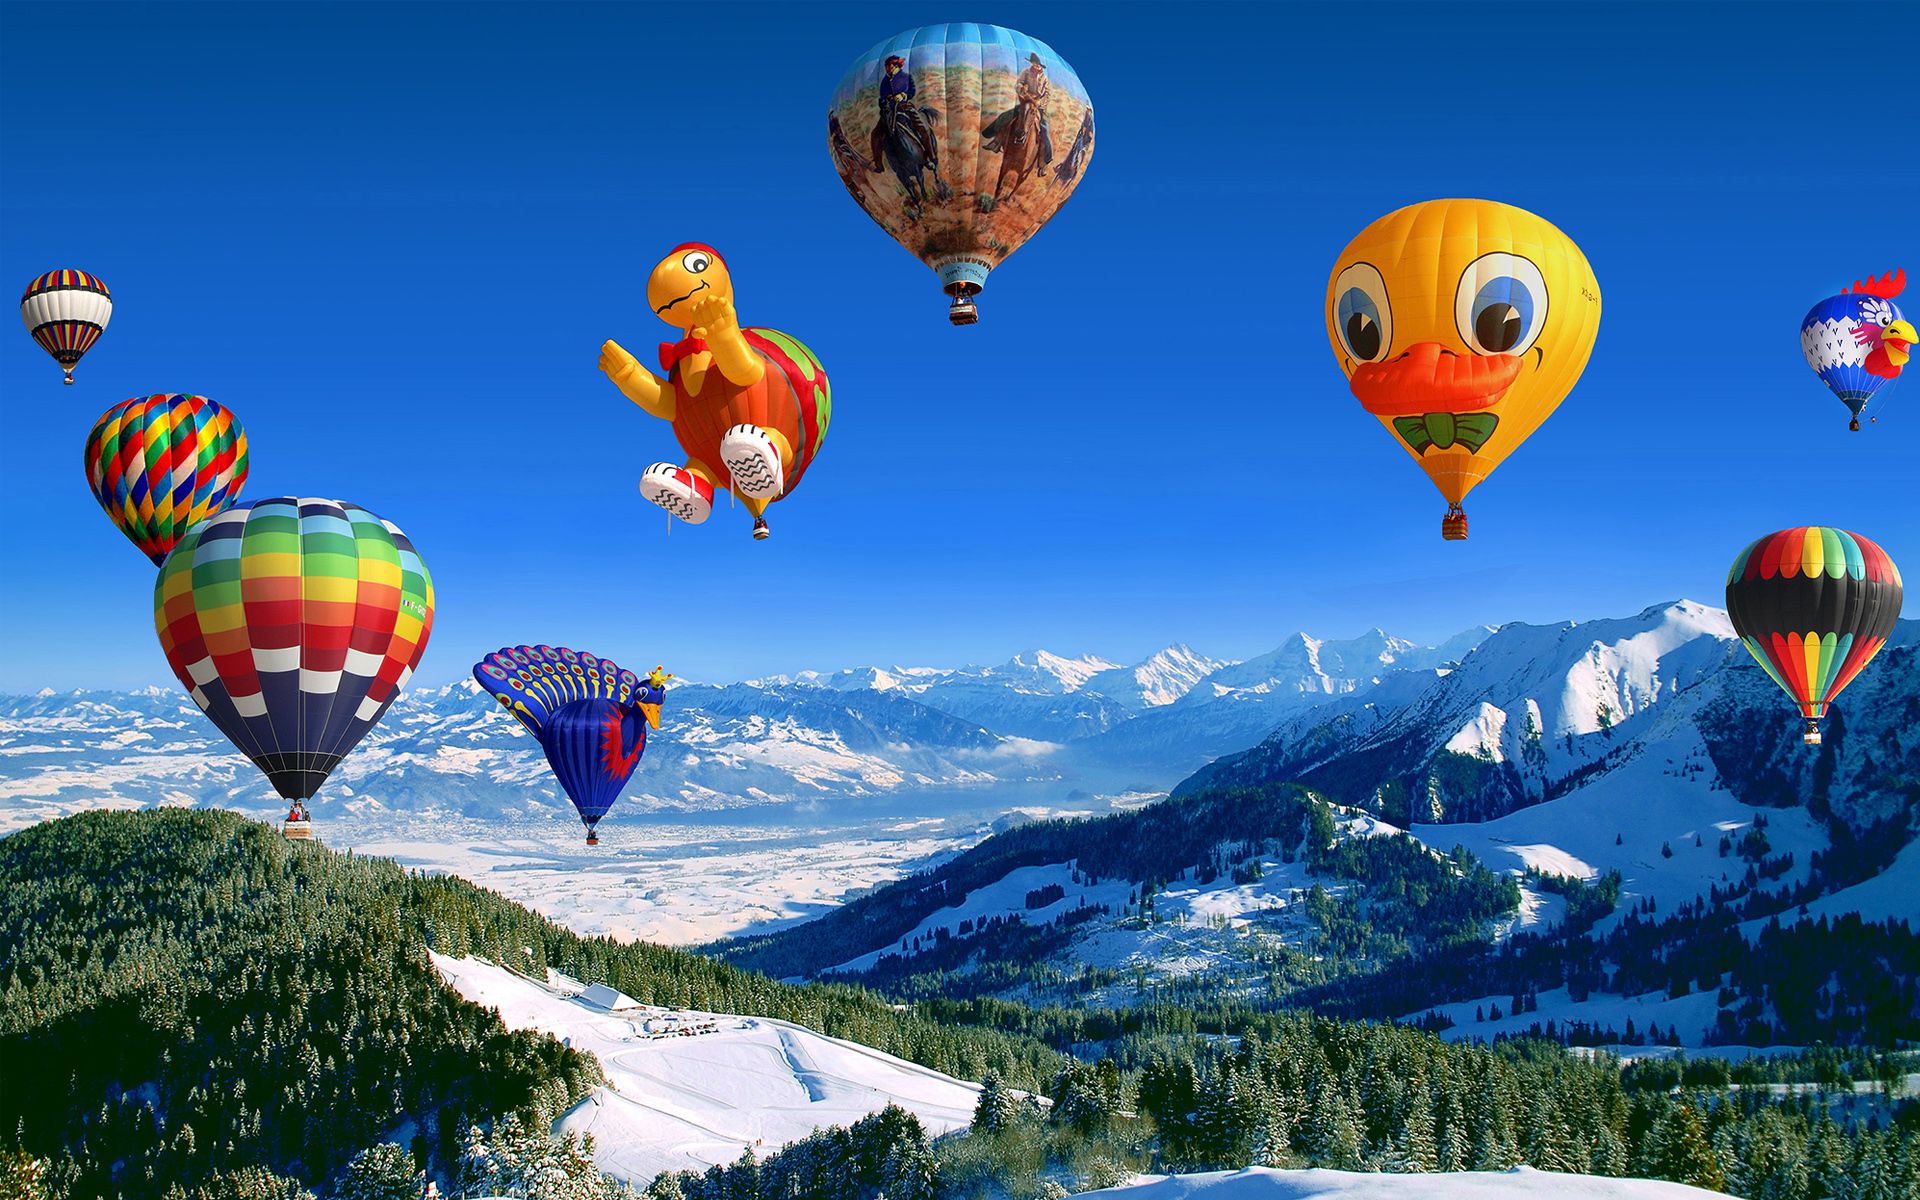 Hot Air Balloon Festival Wallpapers | HD Wallpapers